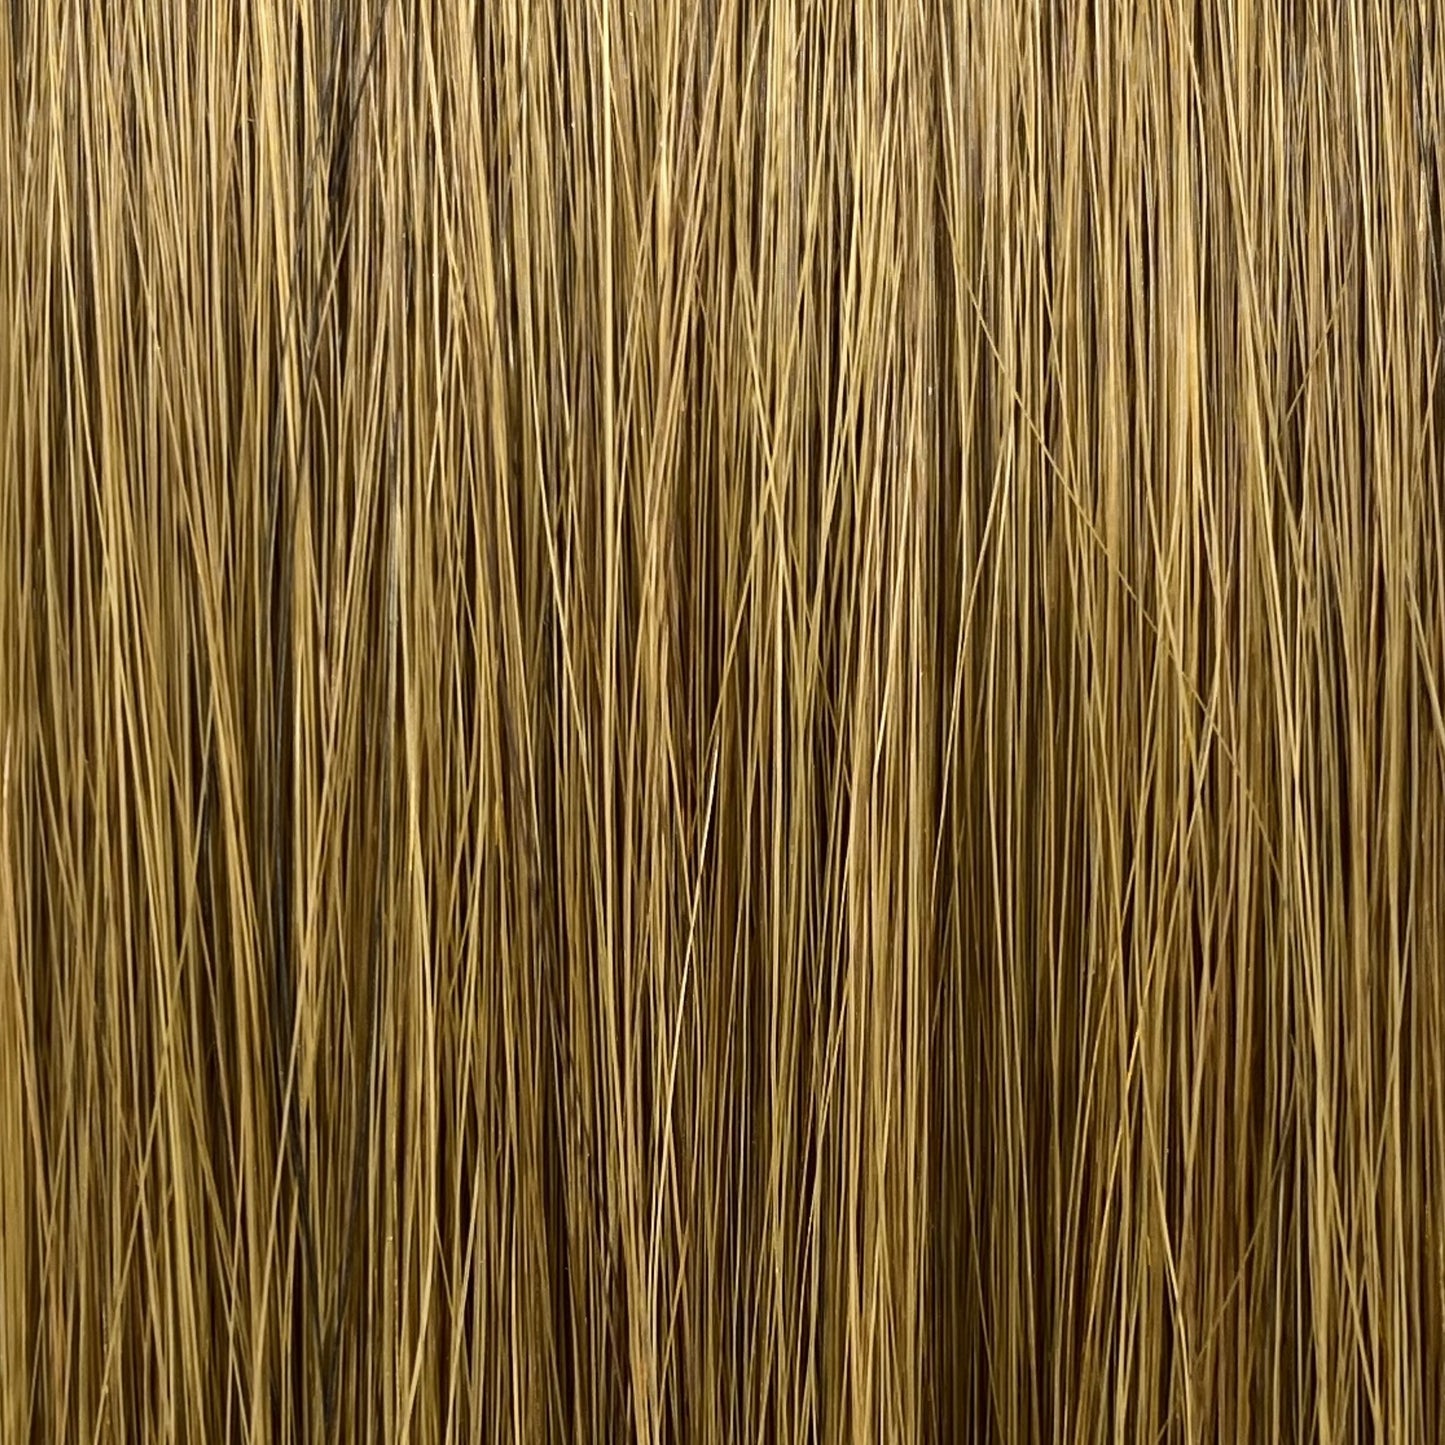 Fusion hair extensions #12 - 50cm/20 inches - Copper Golden Blonde Fusion Euro So Cap 